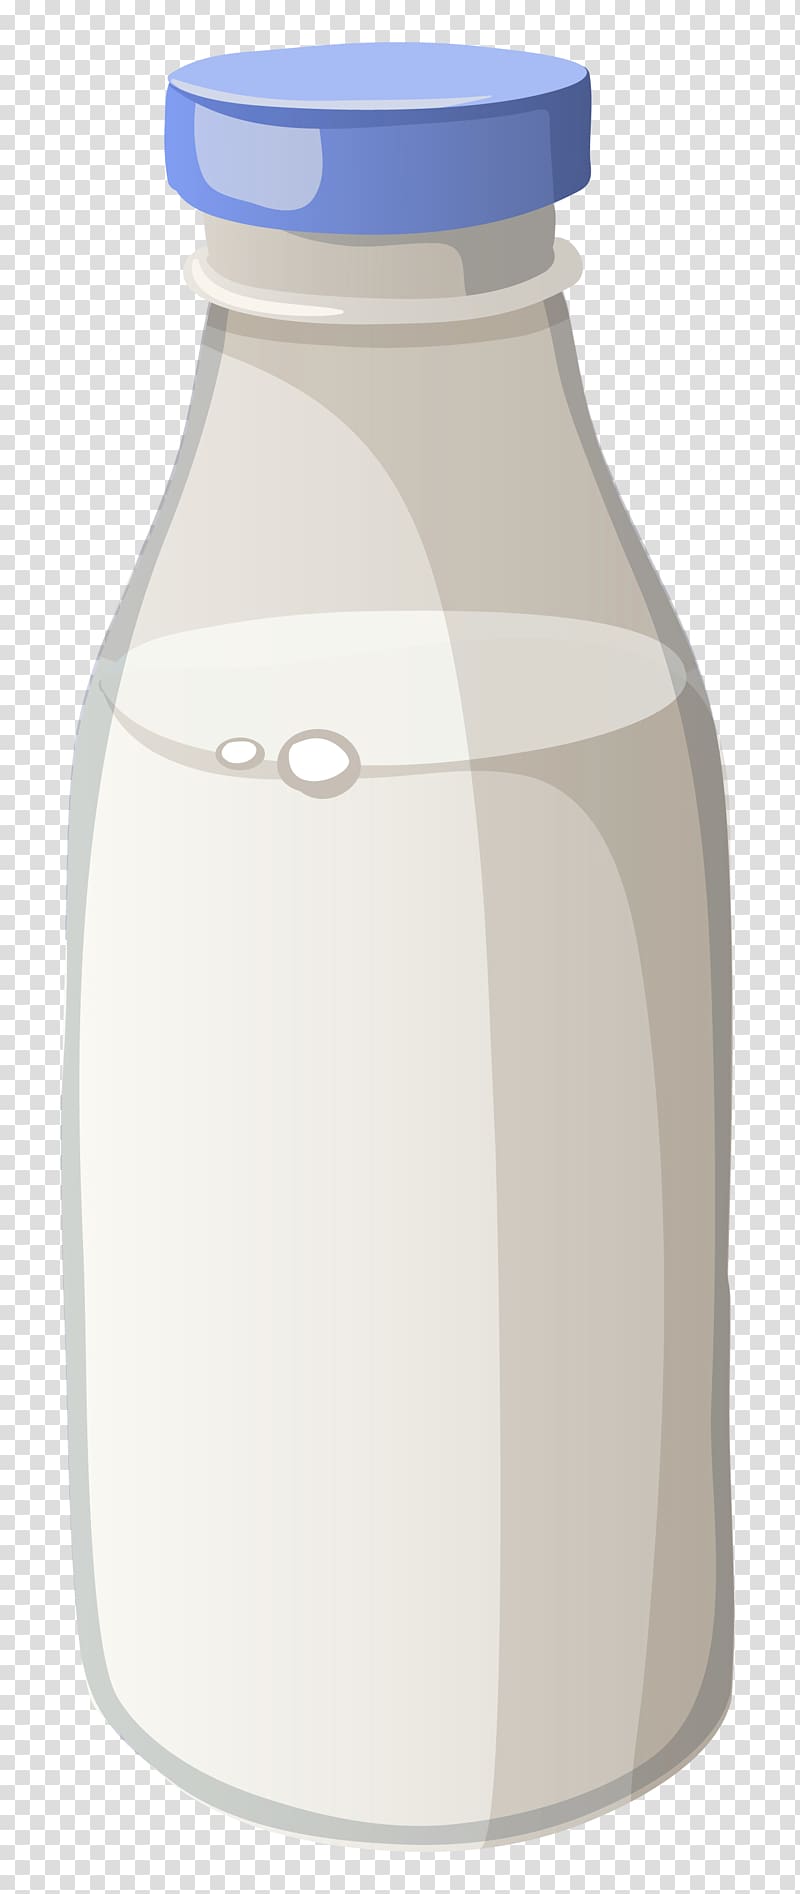 white bottle illustration, Soured milk Bottle Breakfast, Bottle of Milk transparent background PNG clipart